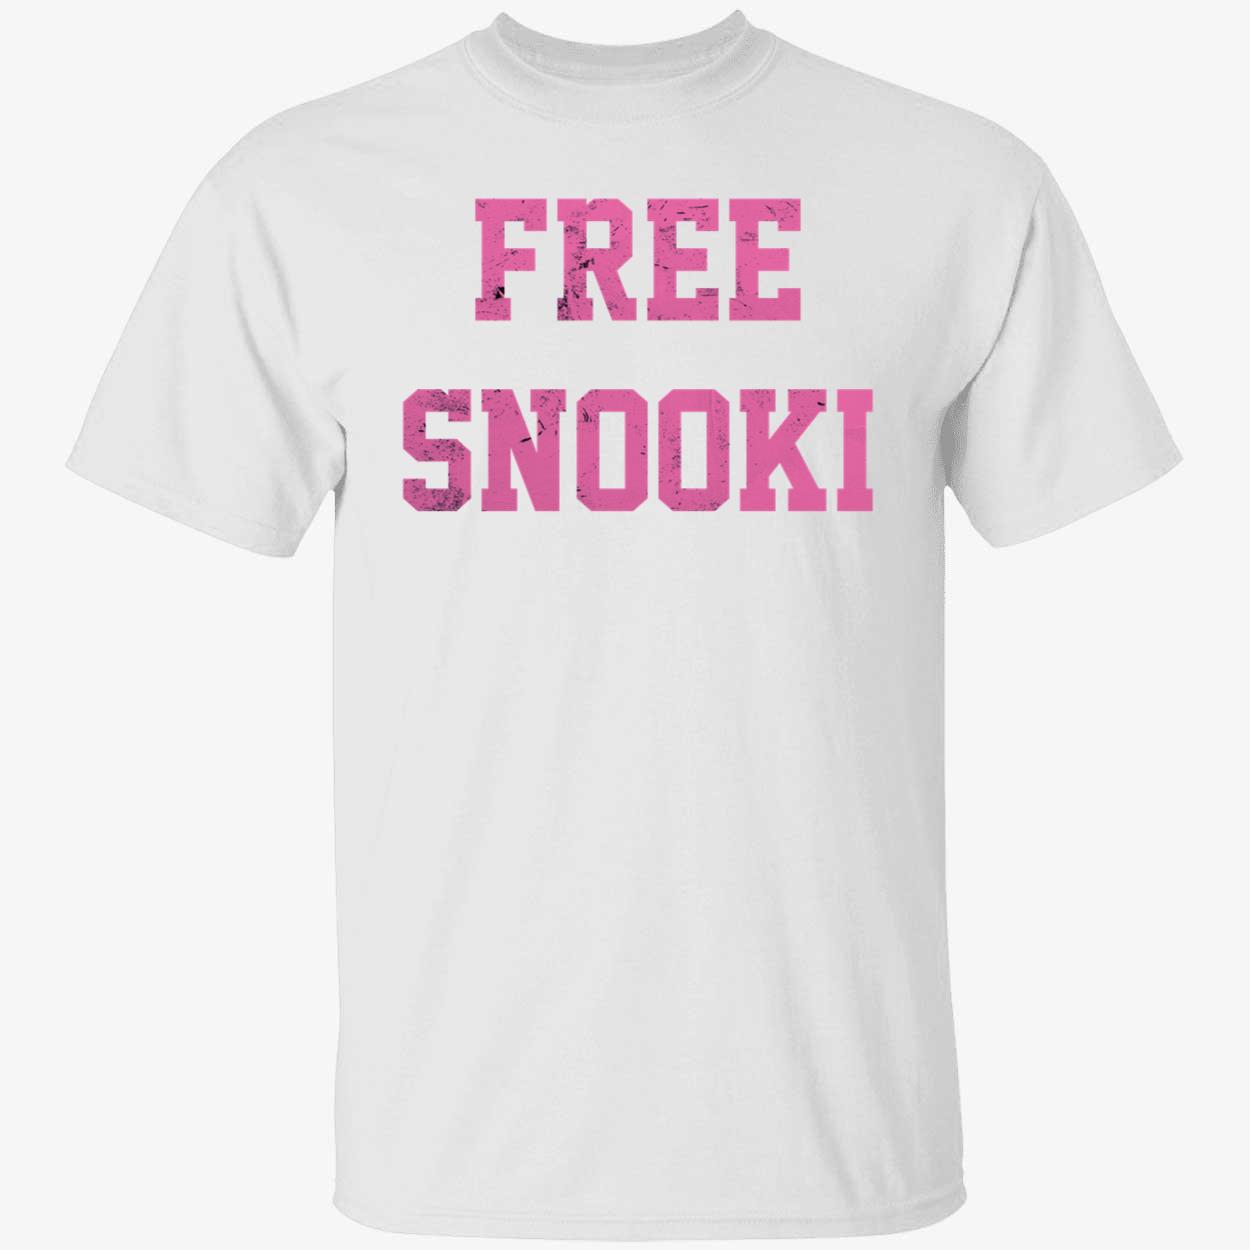 Endastore Free Snooki Shirt